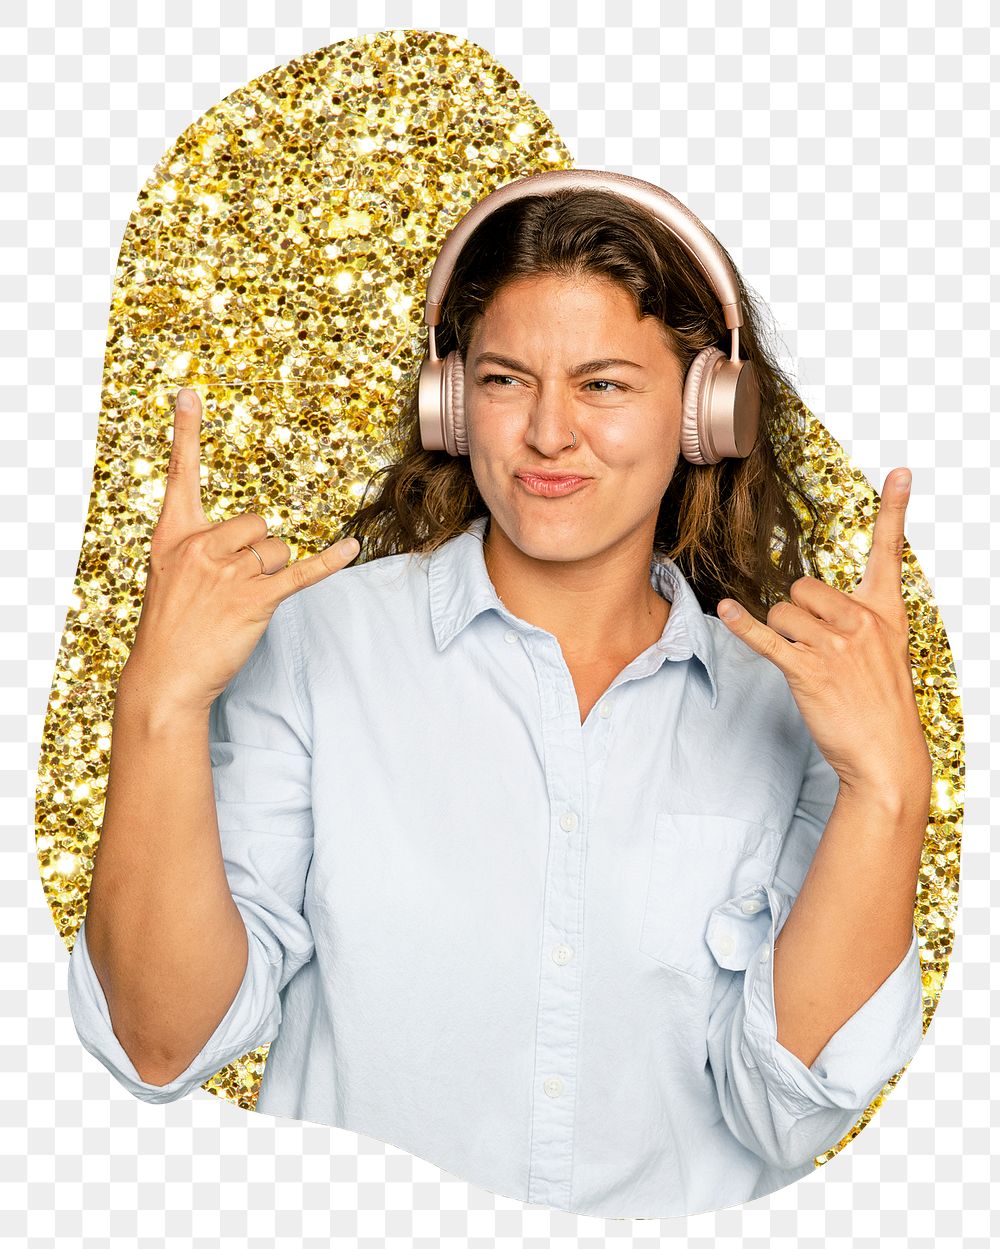 Png woman listening to music sticker, gold glitter blob shape, transparent background